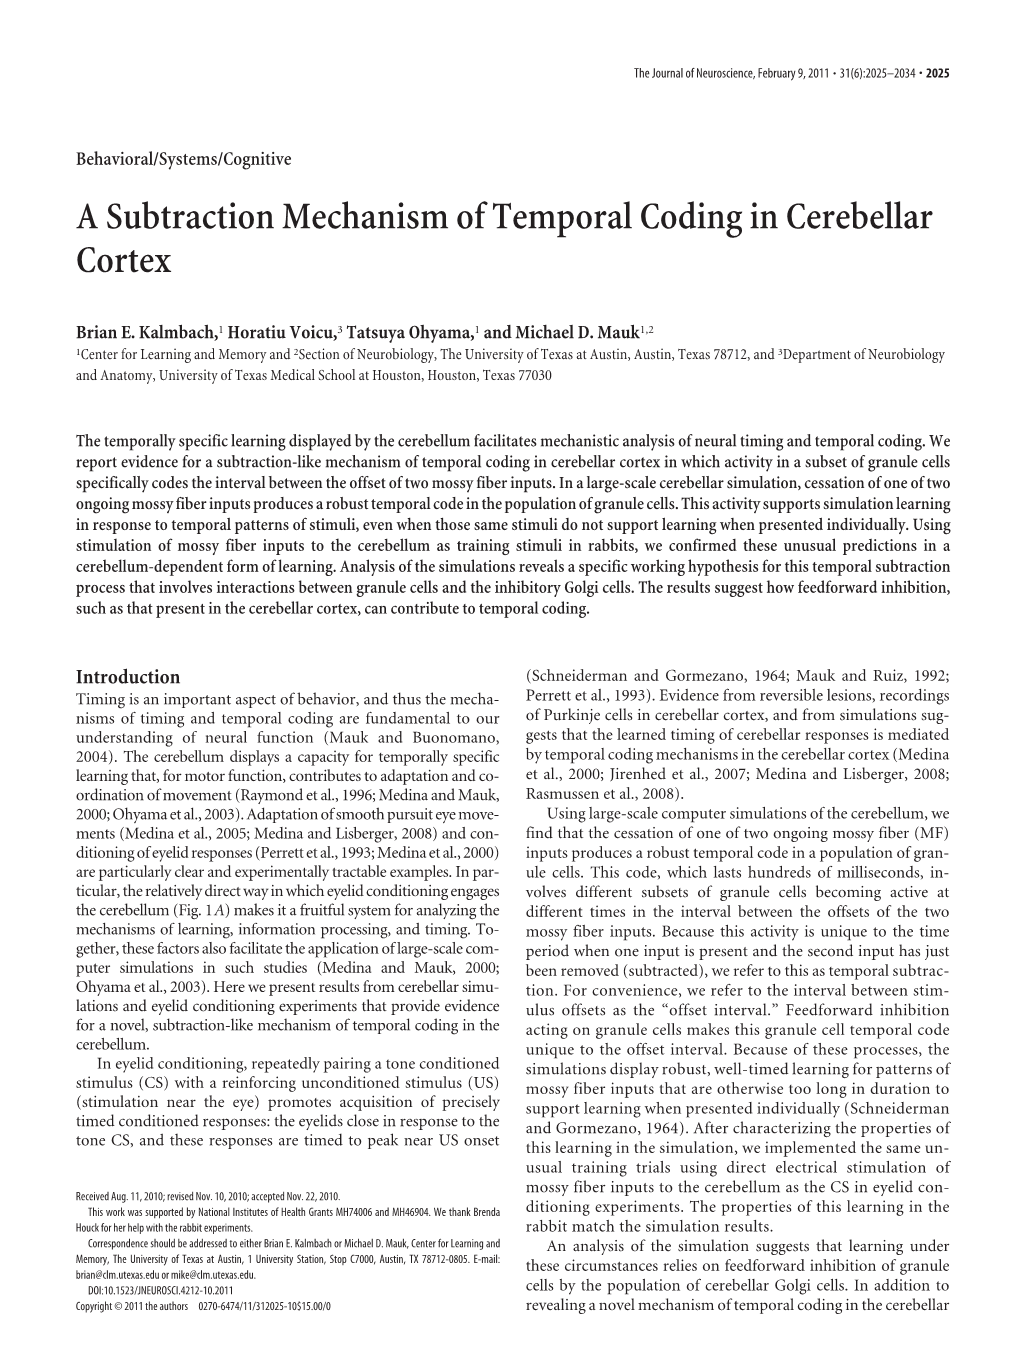 A Subtraction Mechanism of Temporal Coding in Cerebellar Cortex